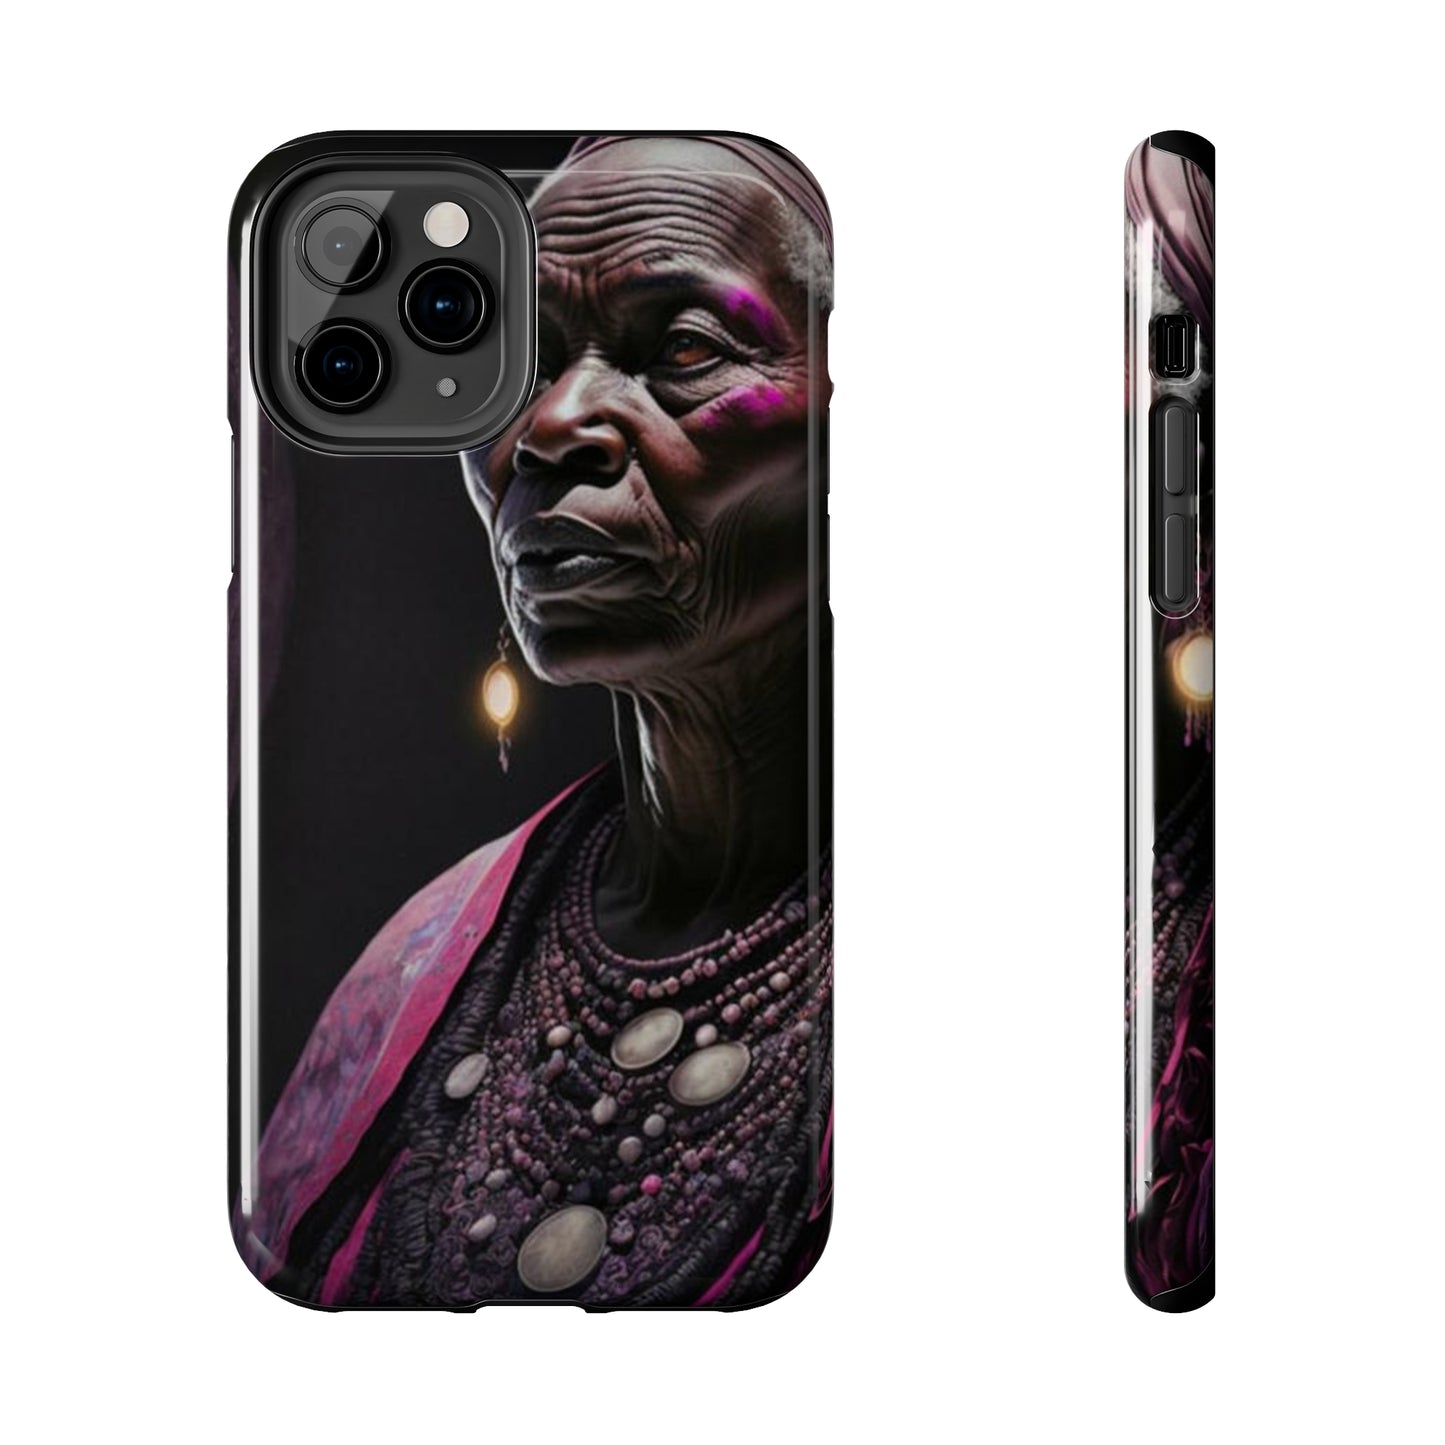 Nana Buruku Tough IPhone Cases